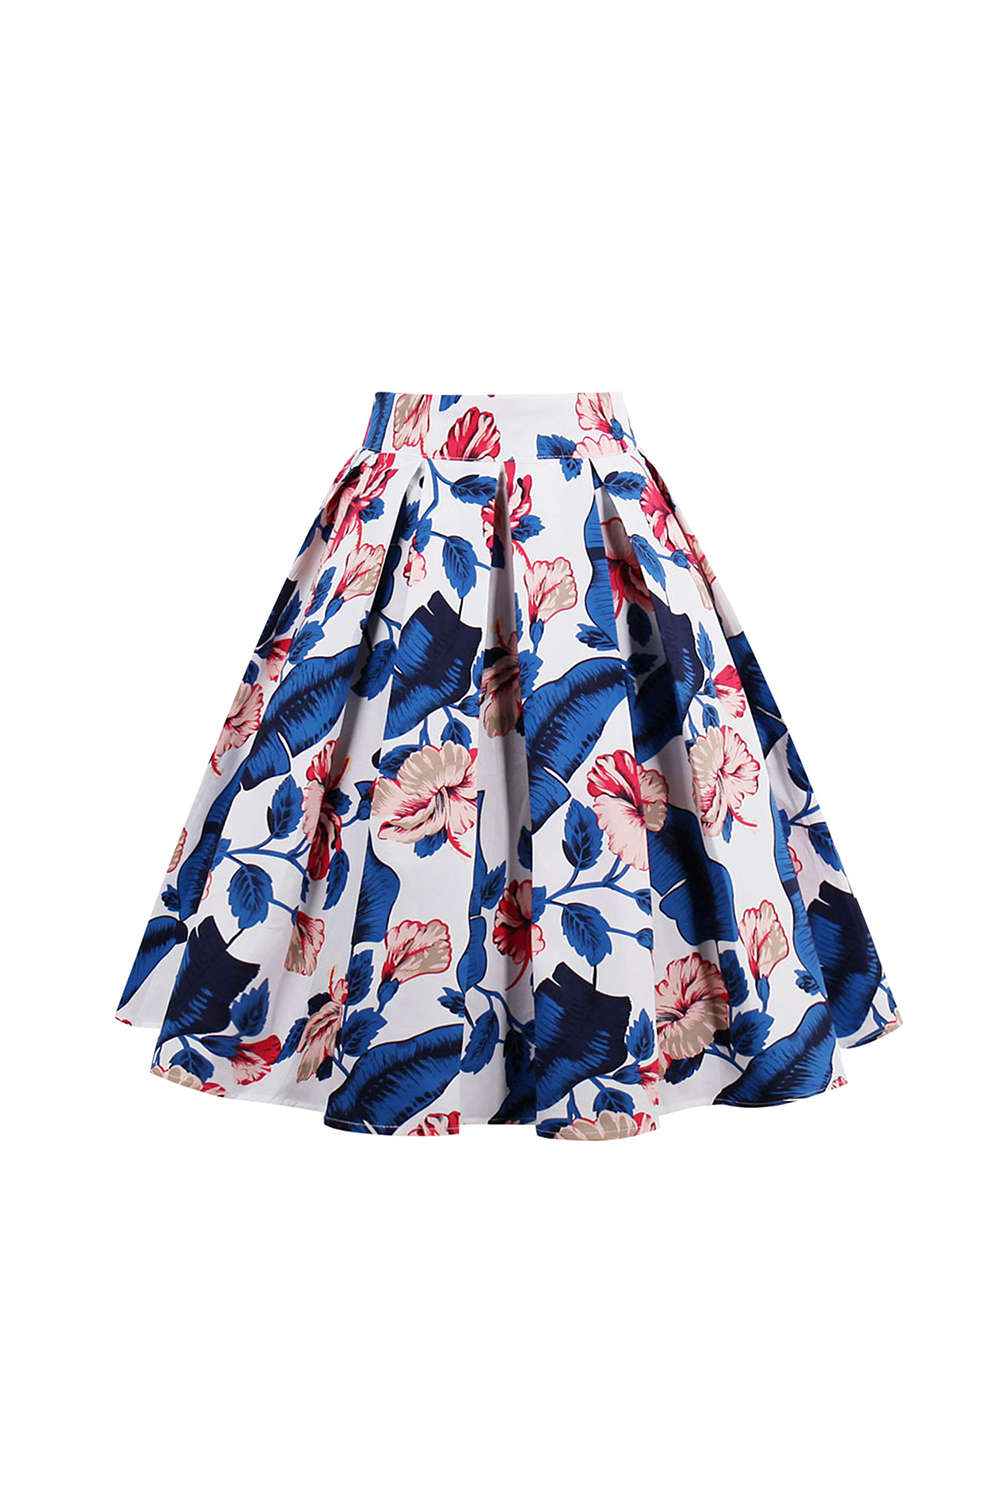 Iyasson High Waist Midi Skirt Floral Printed Pleated Skirt